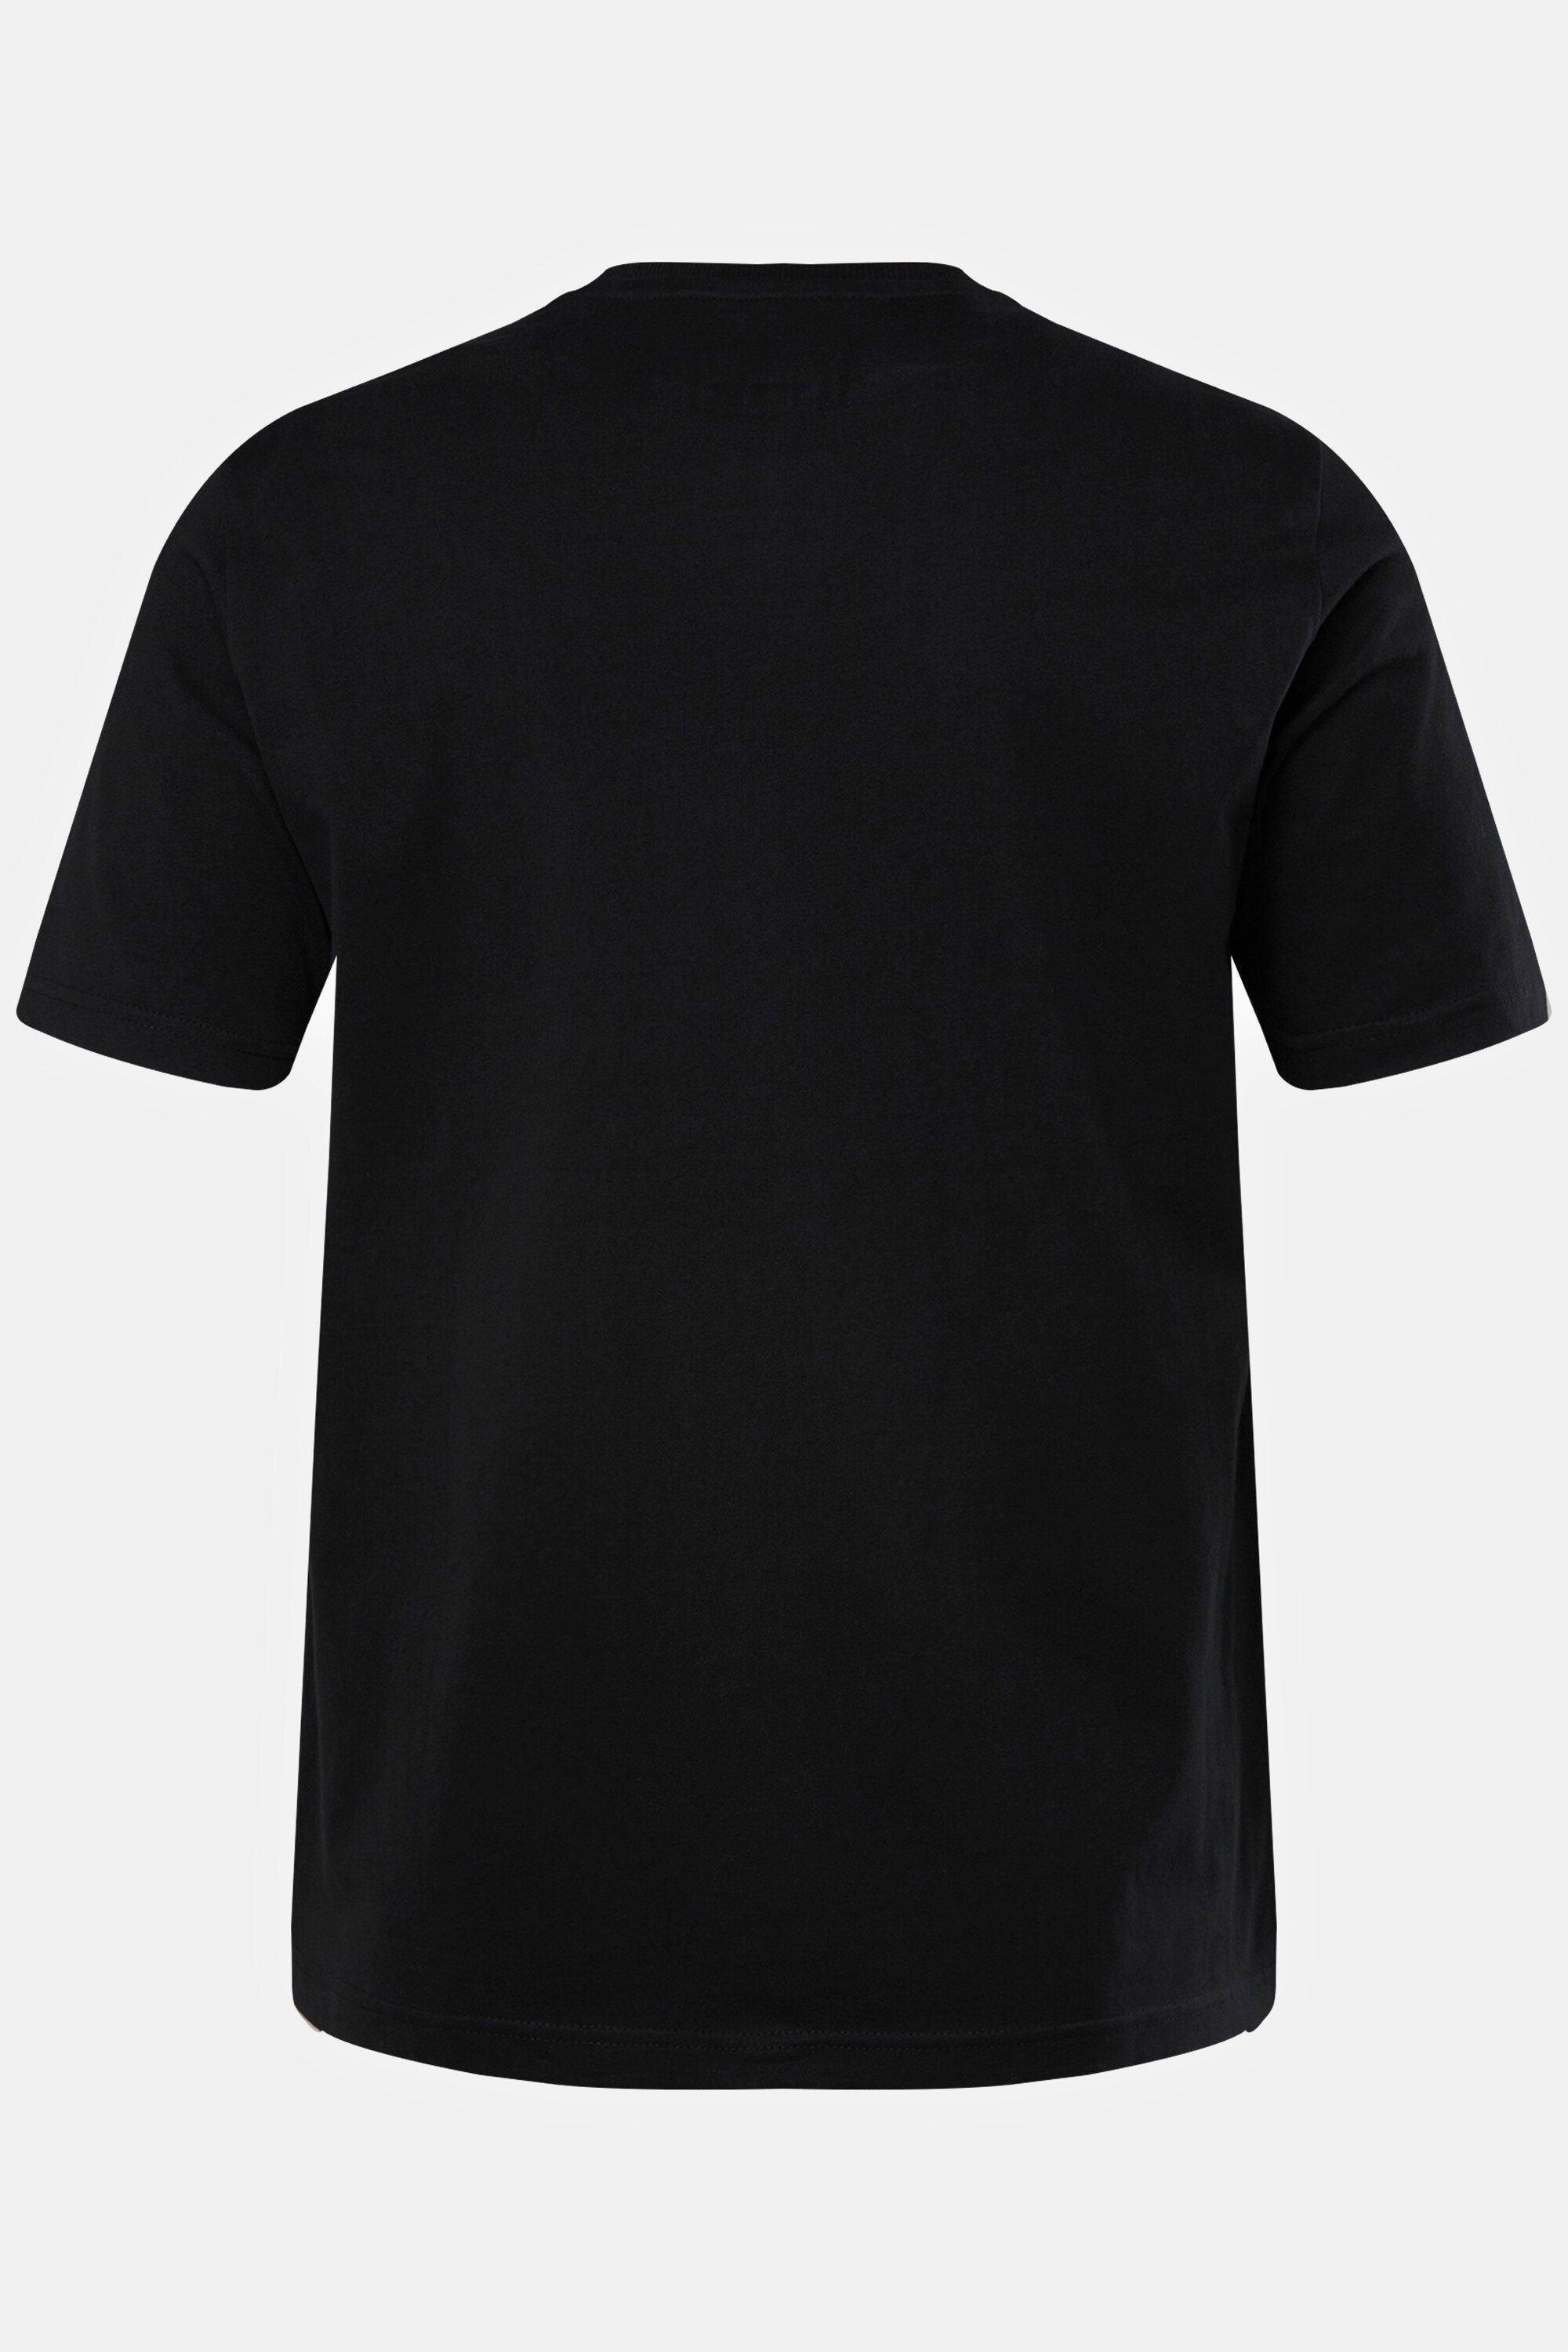 8 XL bis T-Shirt Rundhals Badges STHUGE Halbarm STHUGE T-Shirt